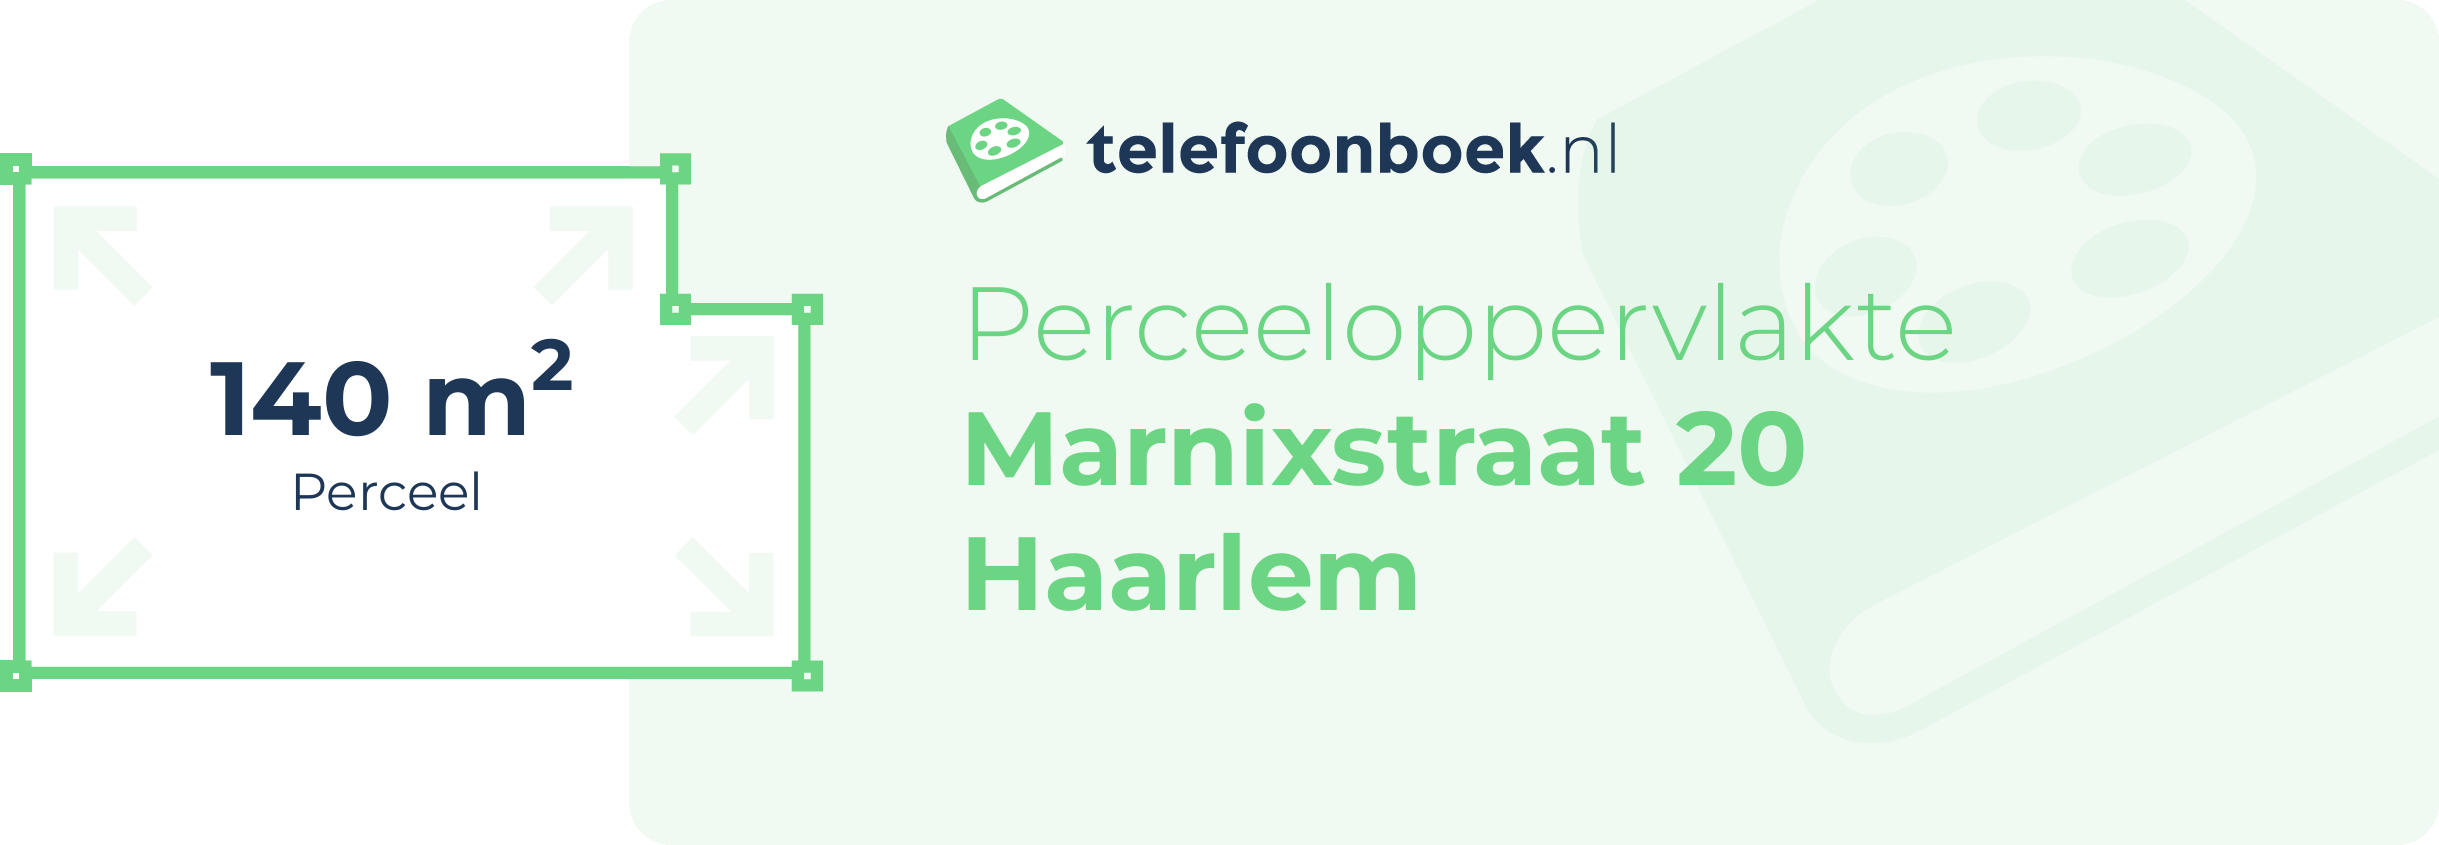 Perceeloppervlakte Marnixstraat 20 Haarlem